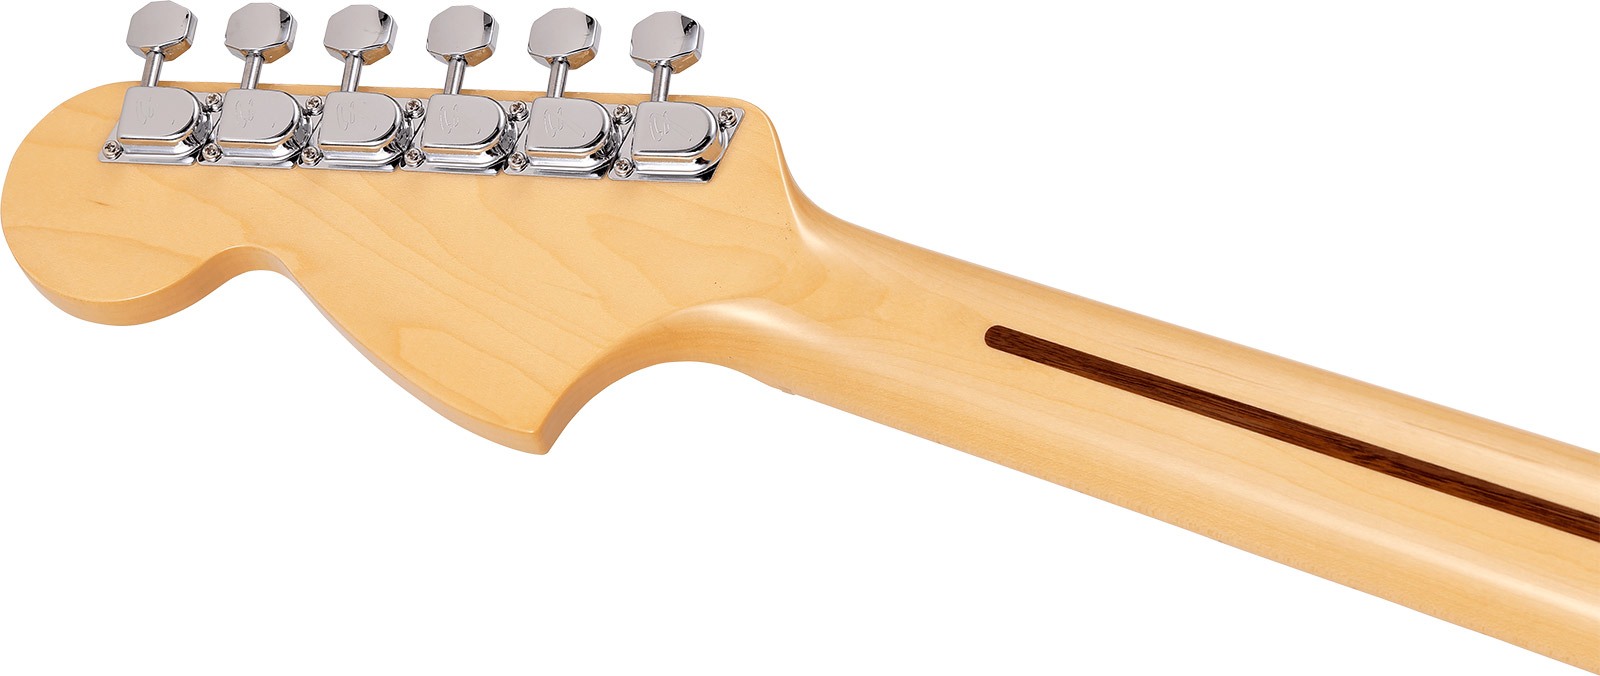 Fender Strat International Color Ltd Jap 3s Trem Mn - Monaco Yellow - E-Gitarre in Str-Form - Variation 3